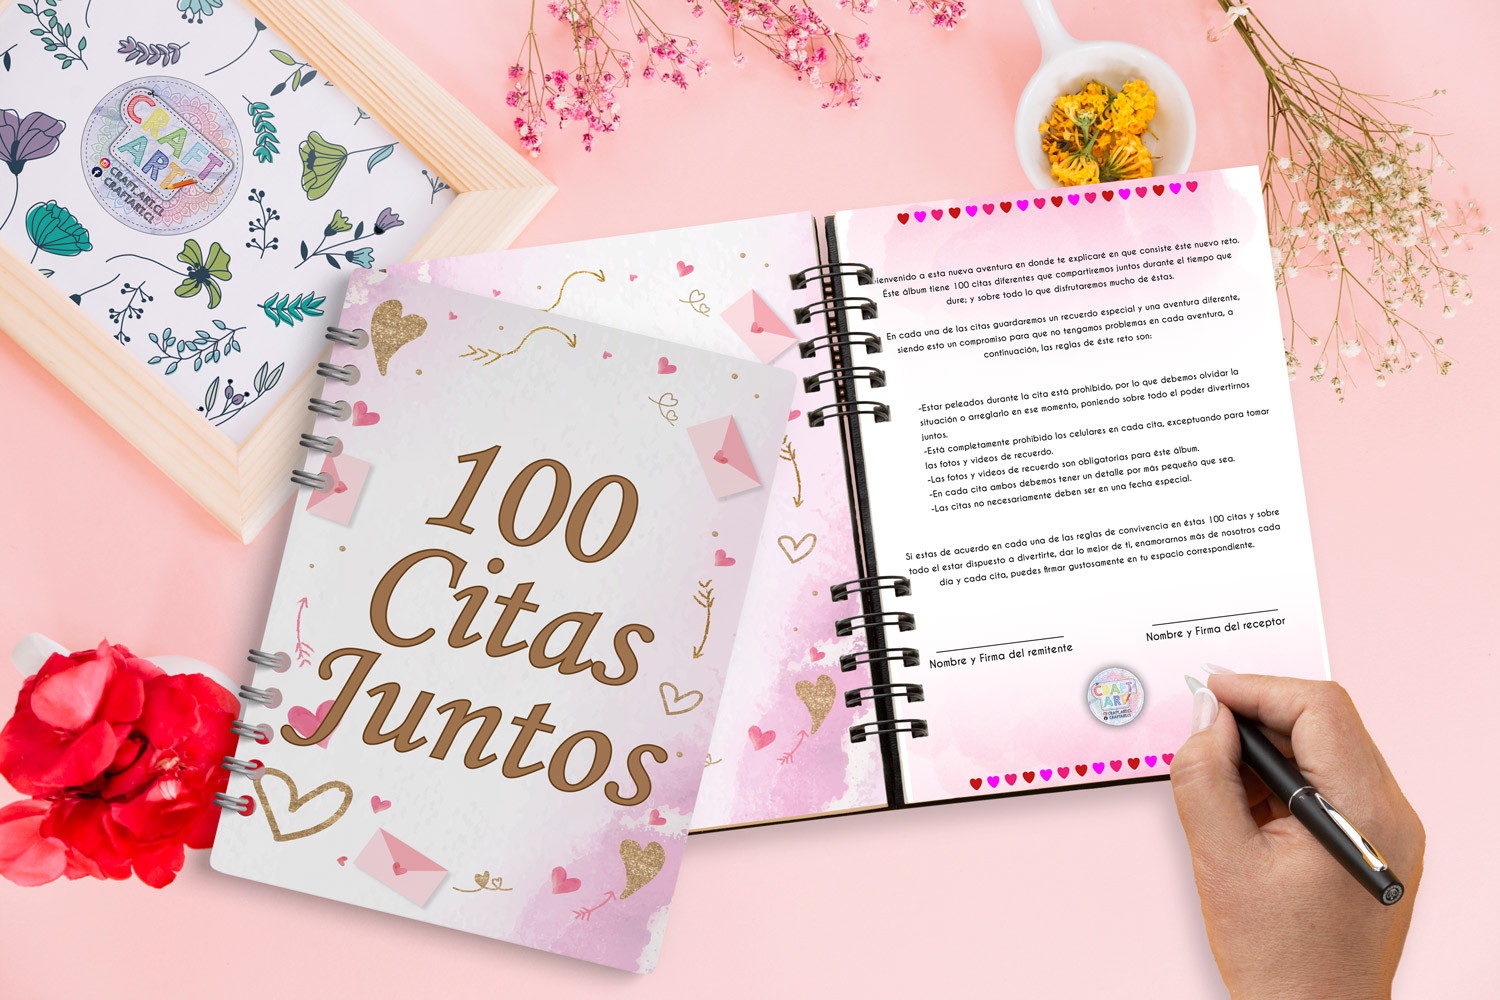 100 citas juntos - Libro Para Parejas 100 Citas Juntos - Craft Art